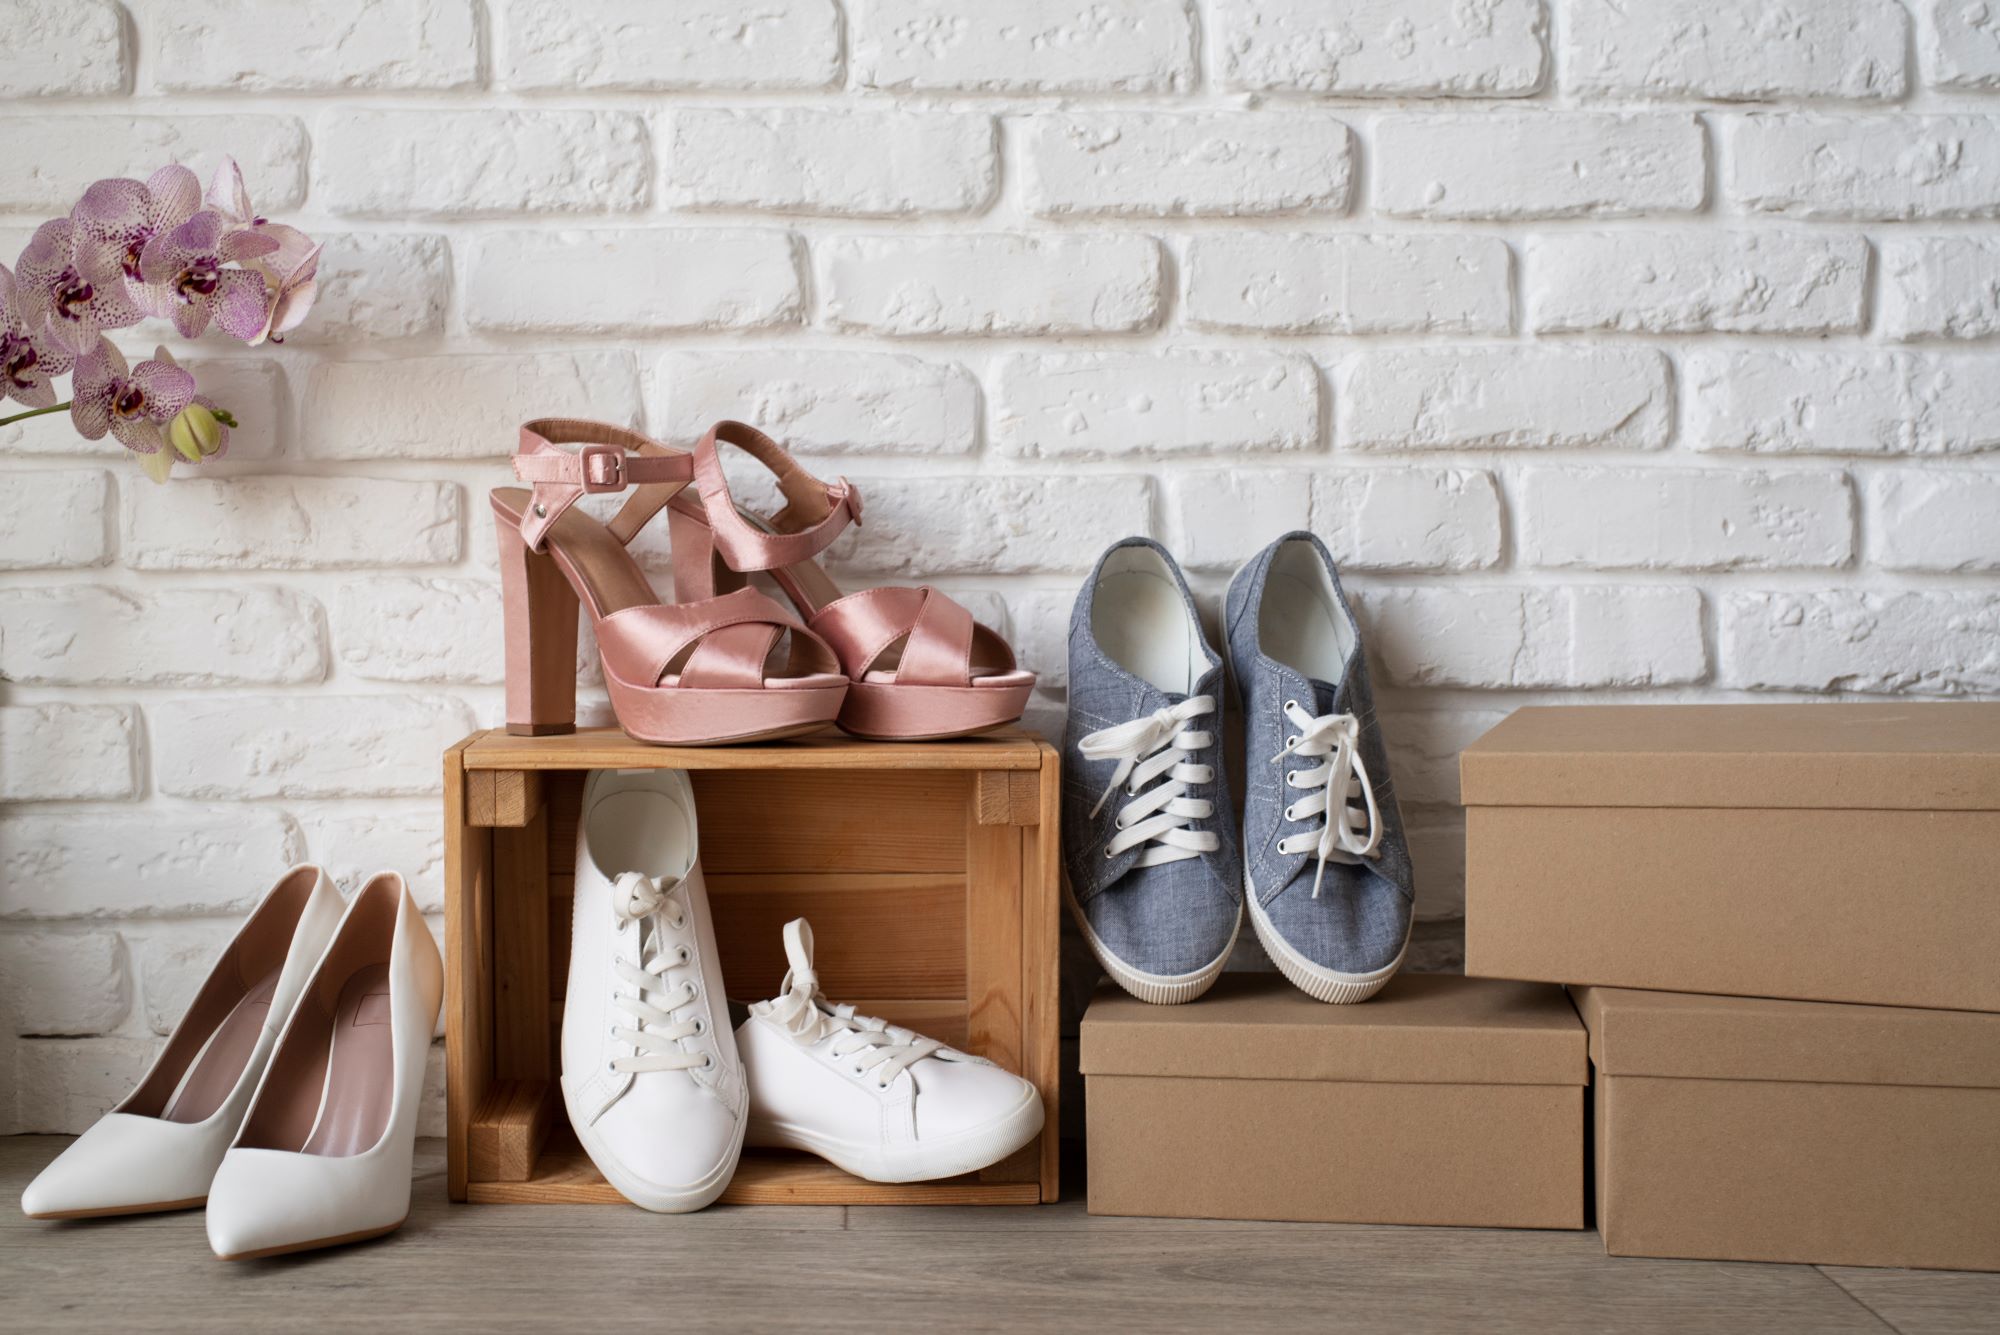 You are currently viewing DIY: איך בונים ארון נעליים?